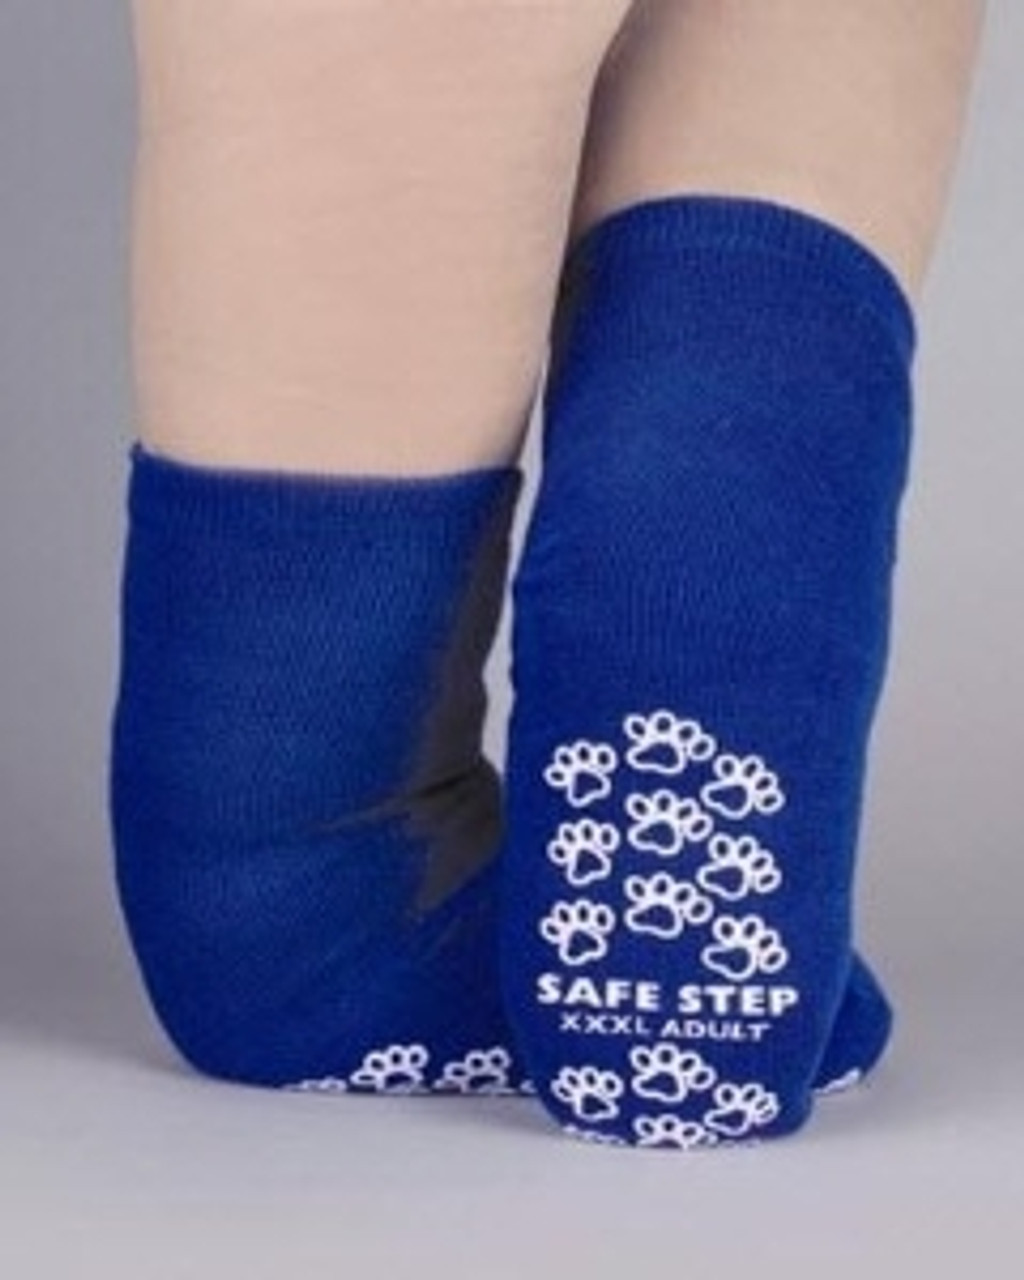 Slipper Socks Pillow Paws Ankle High by Principle Business Enterprises